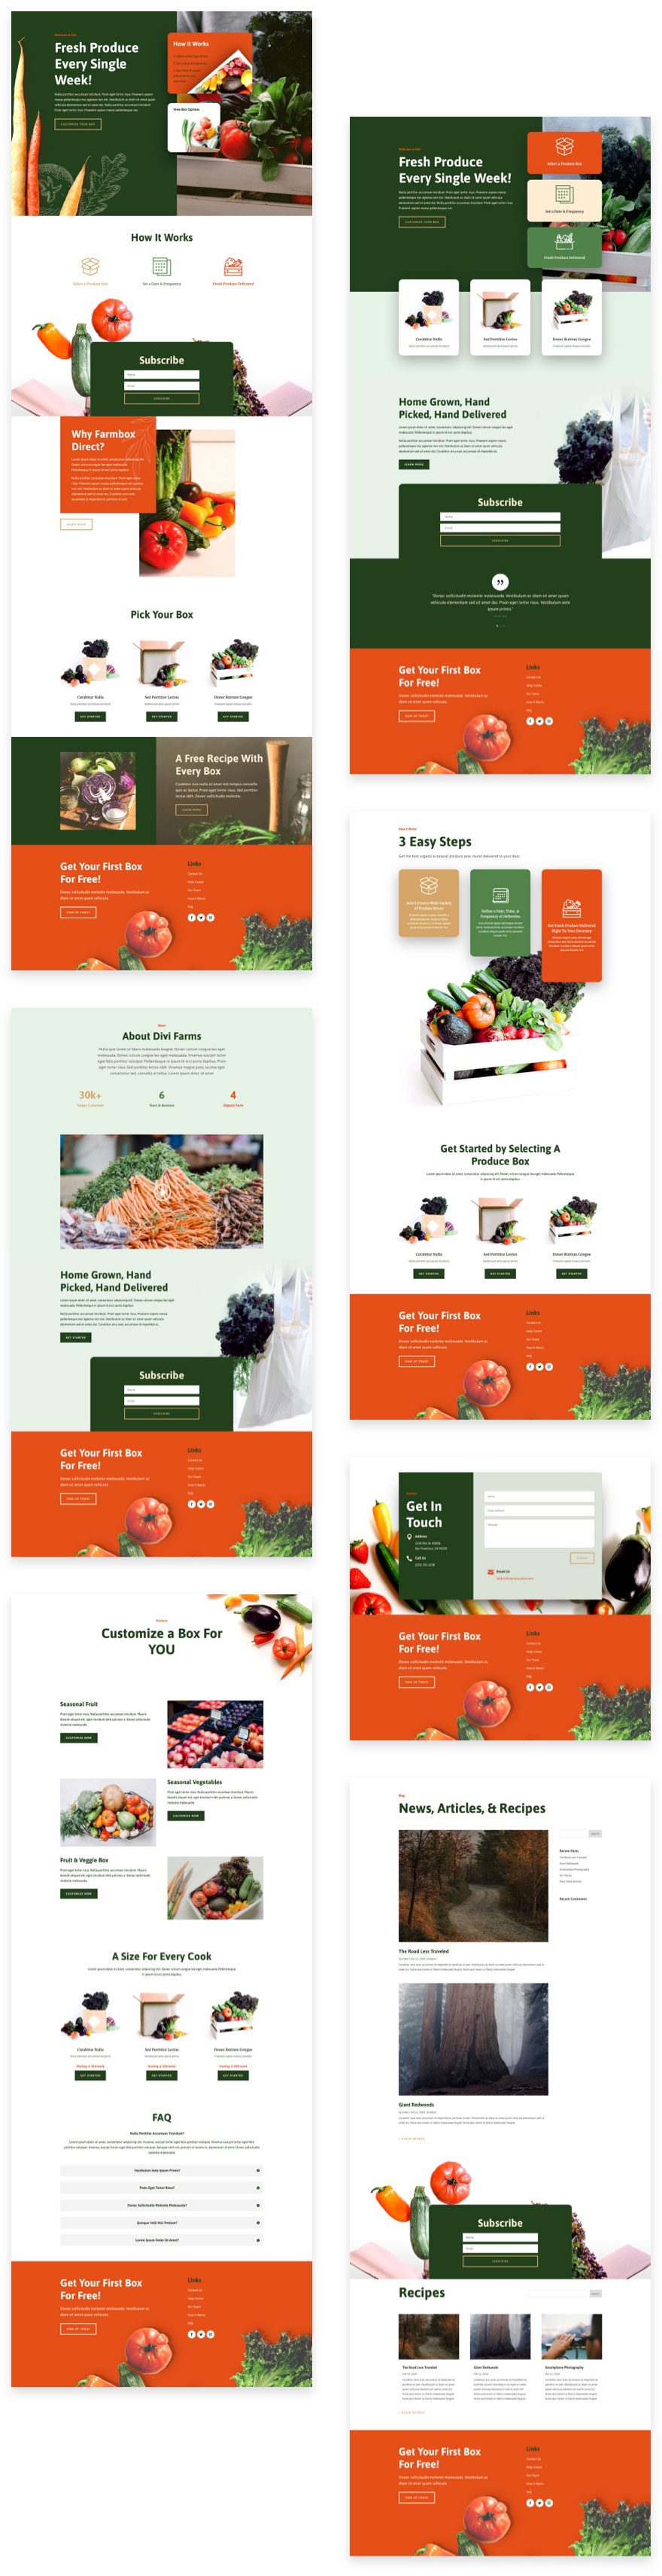 produce box website